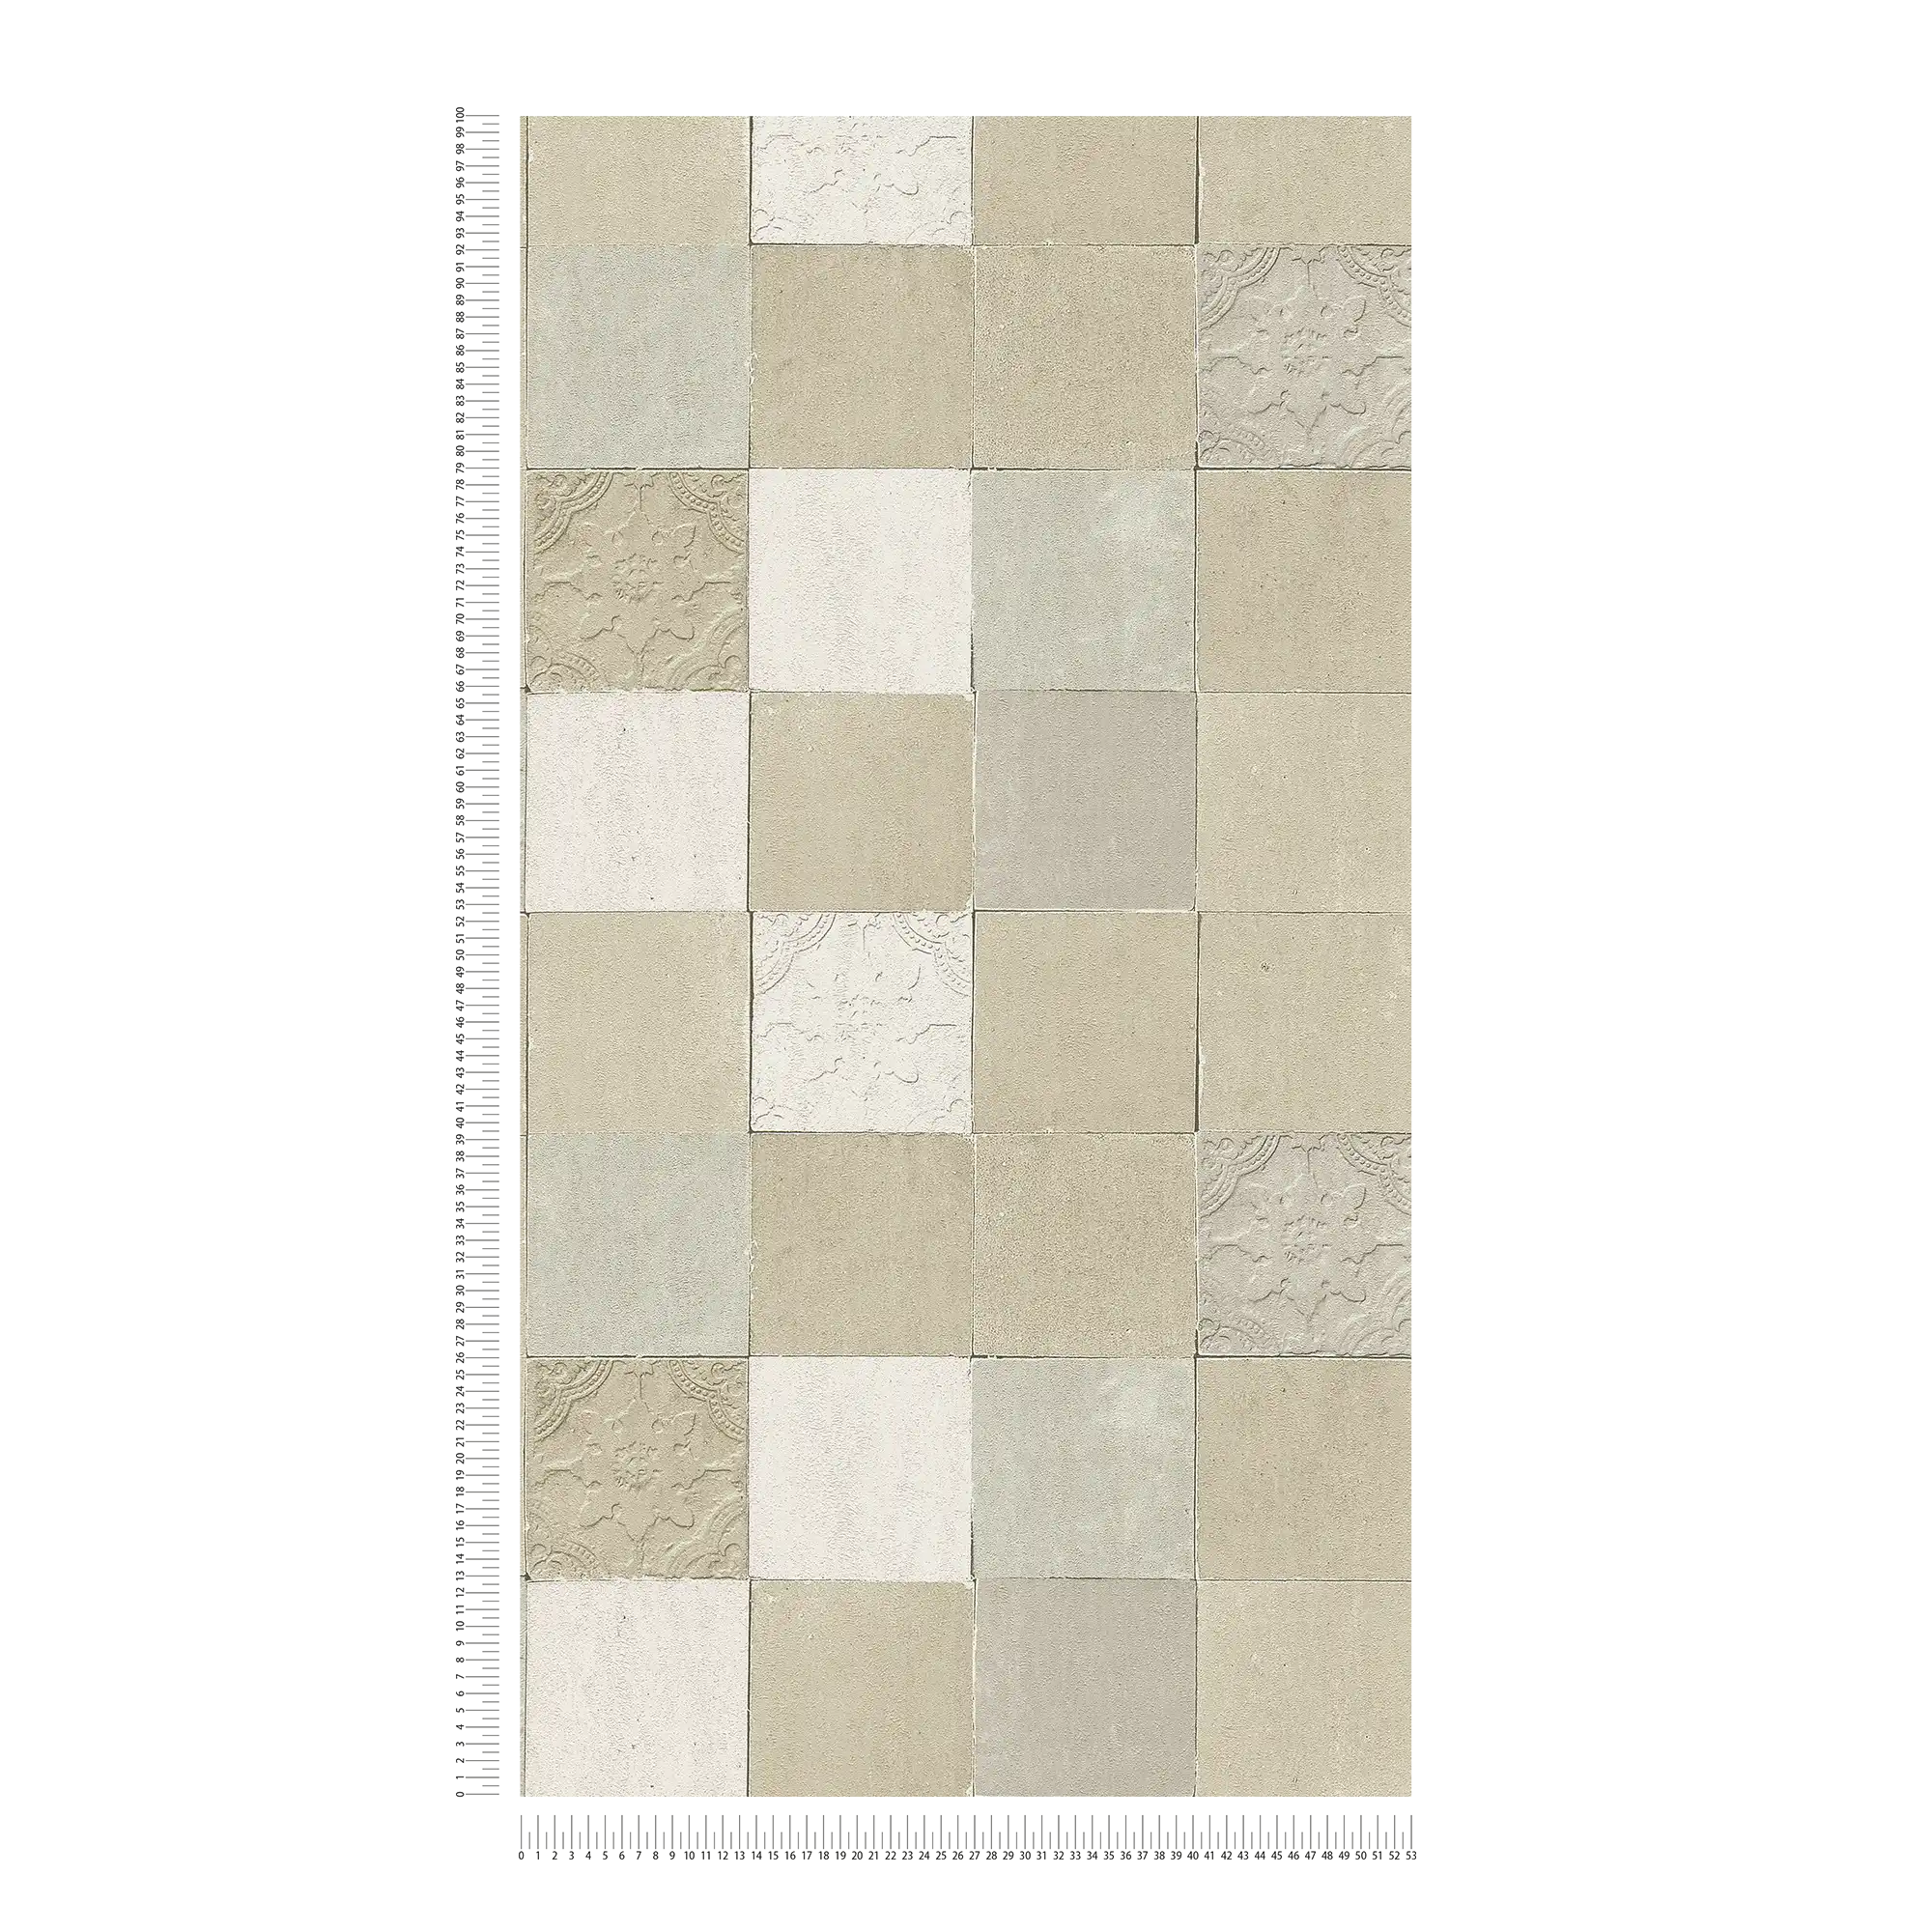             Carta da parati a piastrelle mosaico orientale - crema, grigio
        